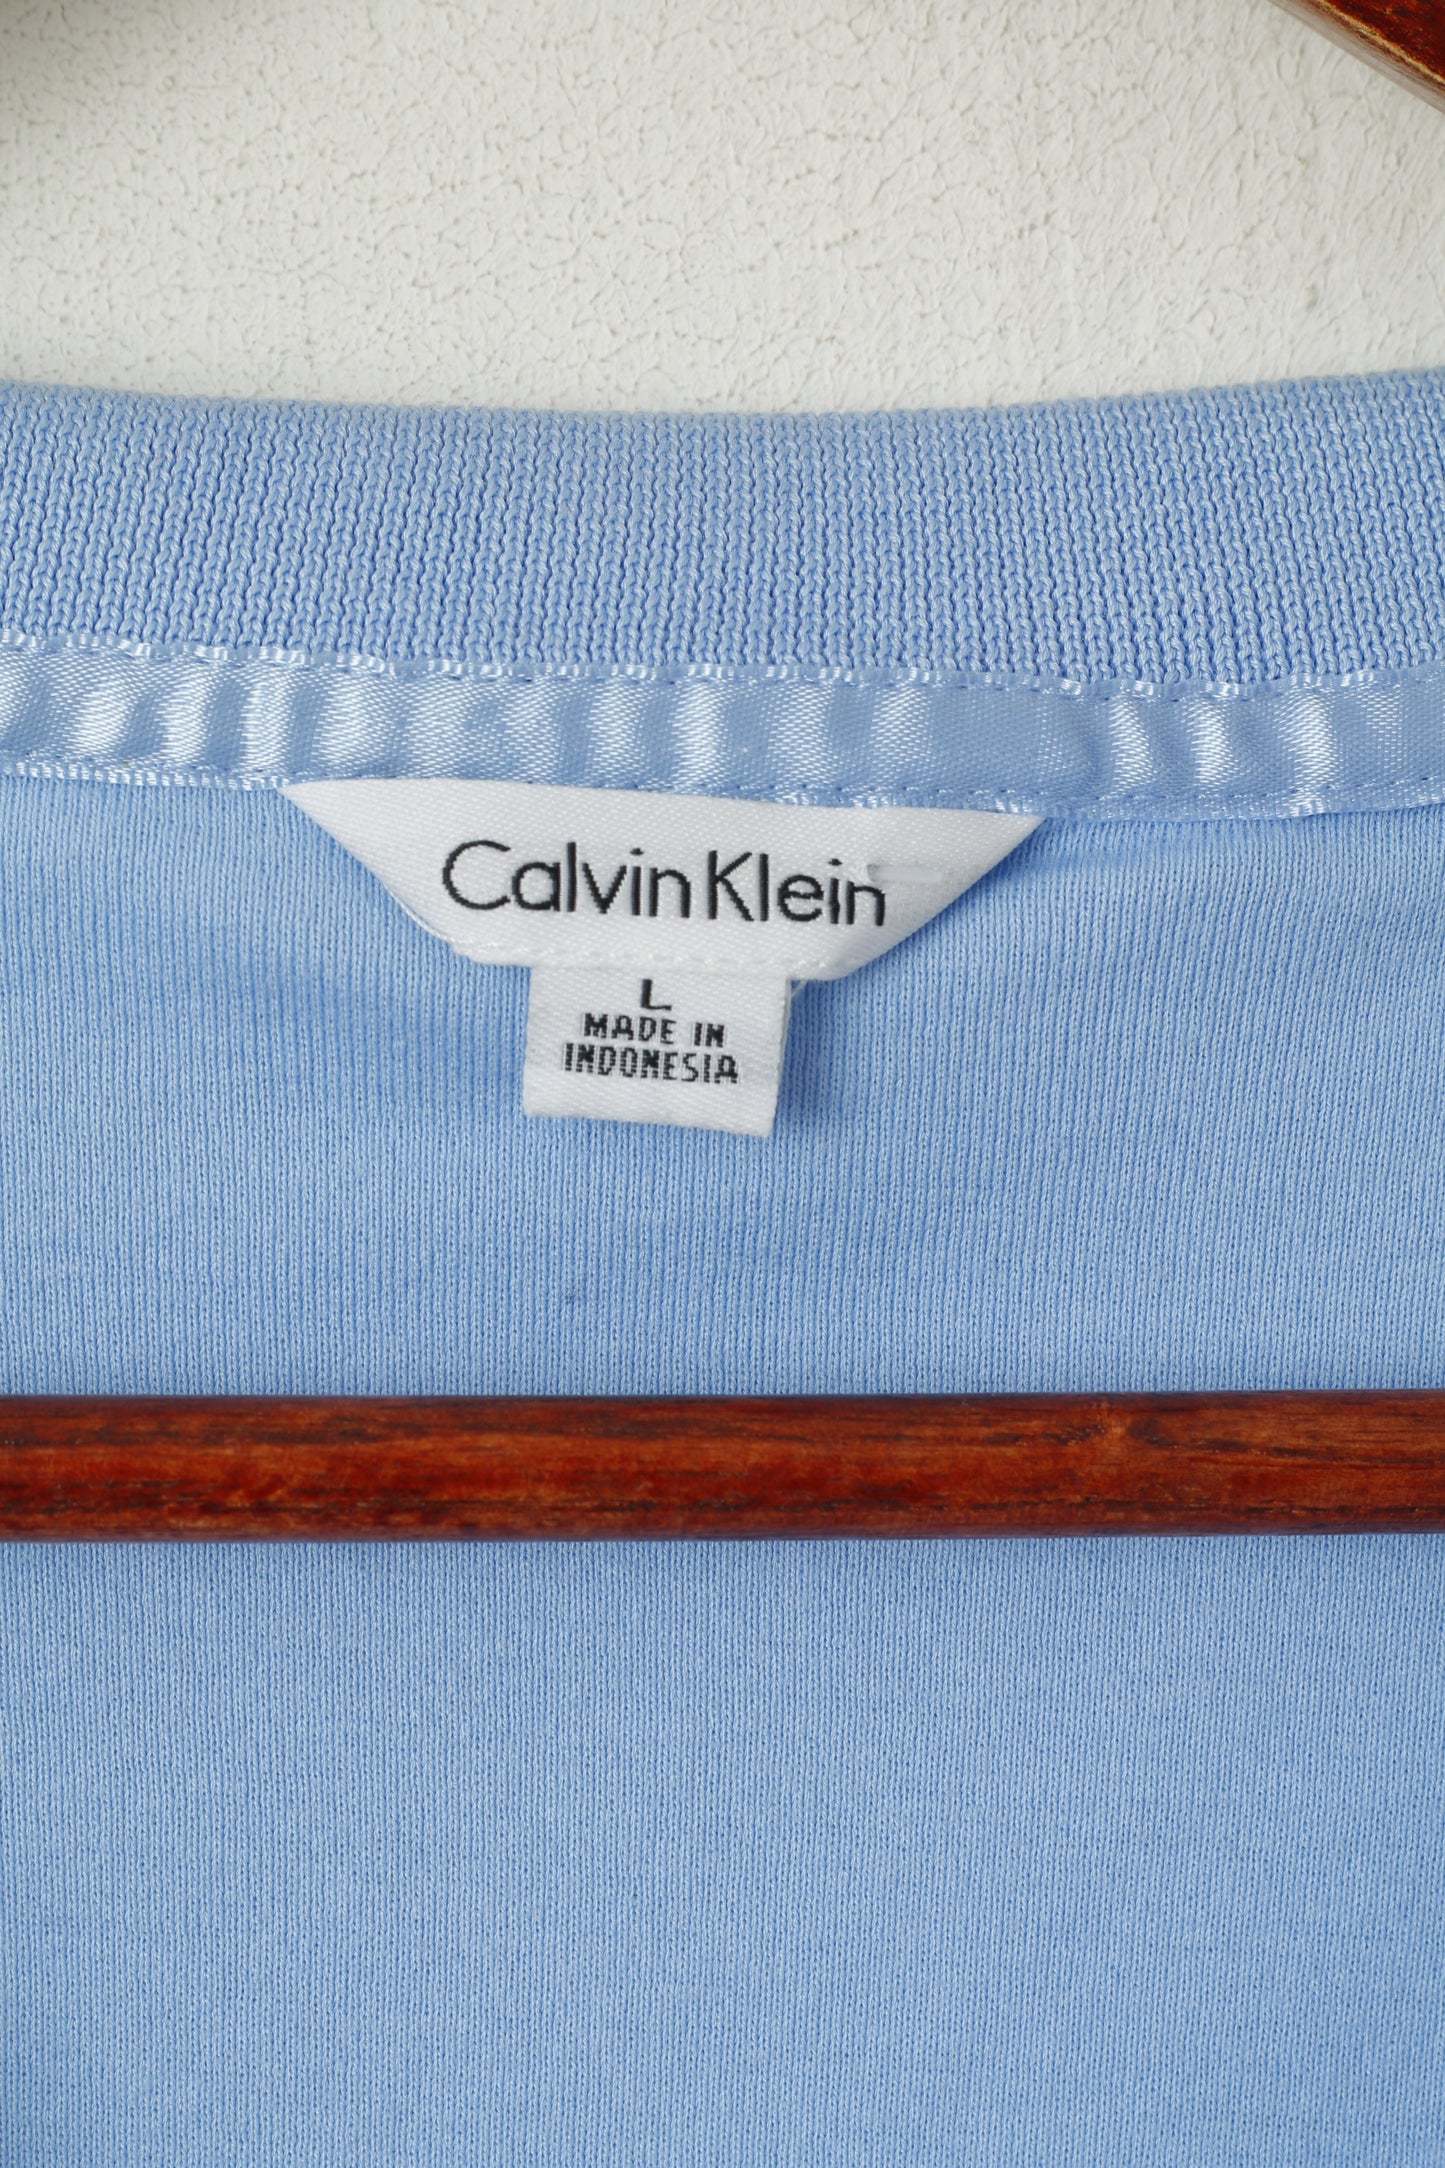 Calvin Klein Women L Polo Shirt Blue Cotton Cropped Short Sleeve Top